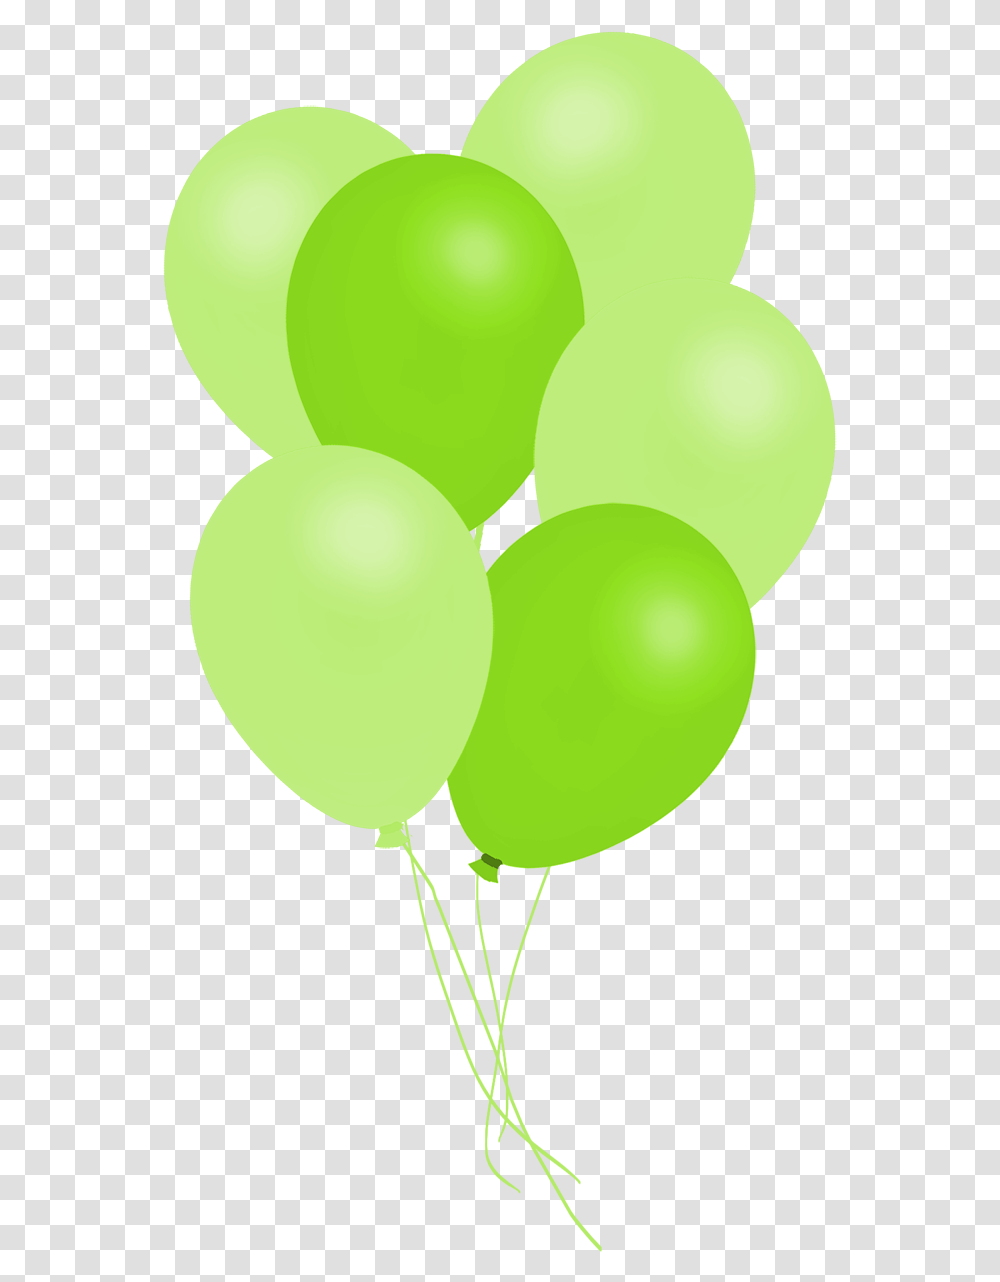 Bunch Of Green Balloons Balloon Transparent Png